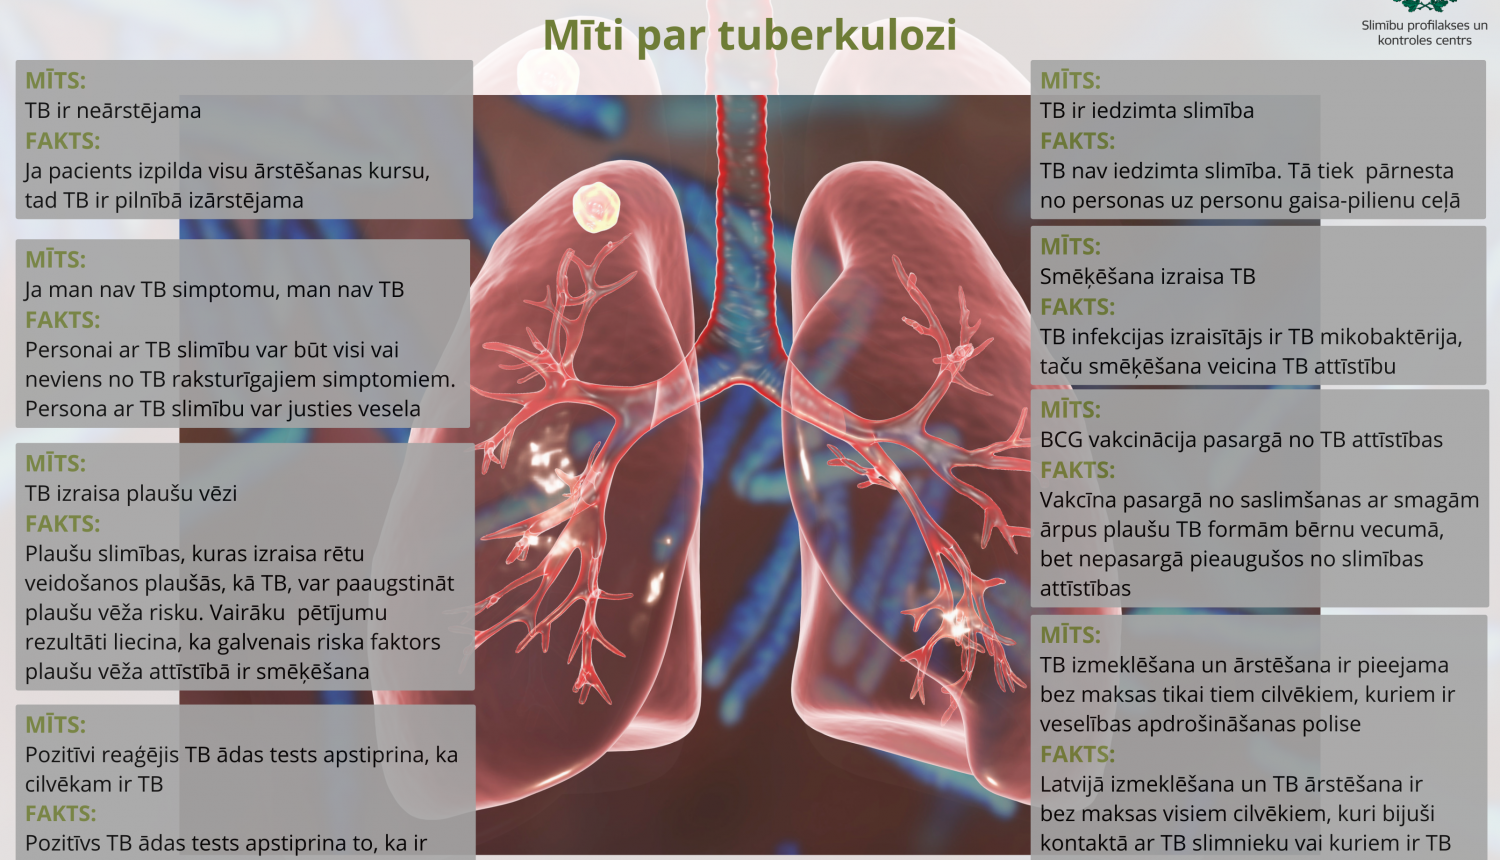 24.marts - Pasaules Tuberkulozes diena